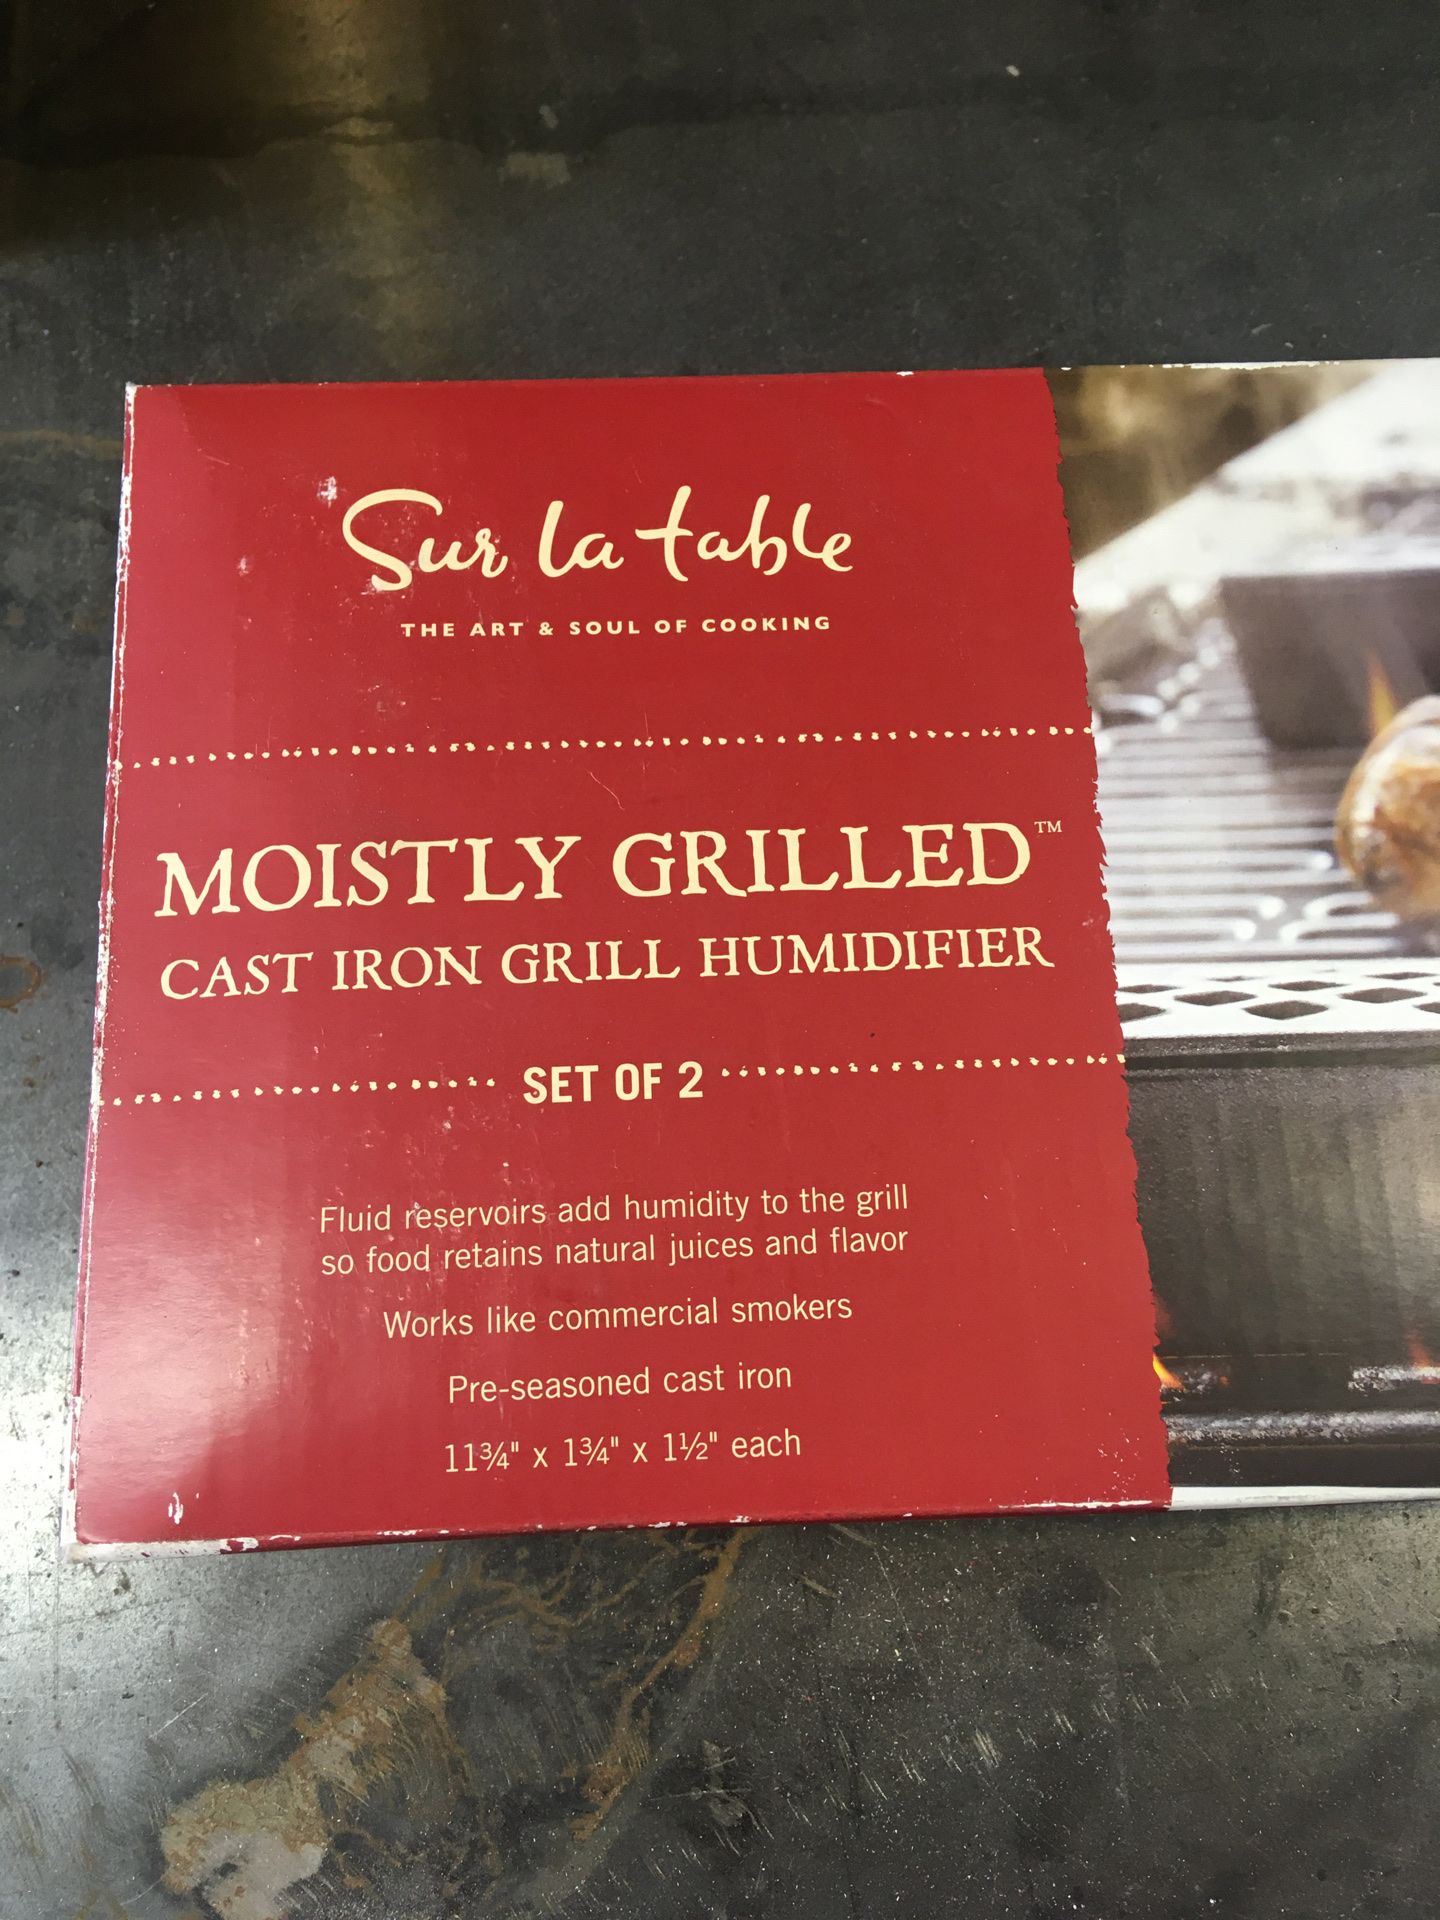 Sur La Table cast iron grill humidifier